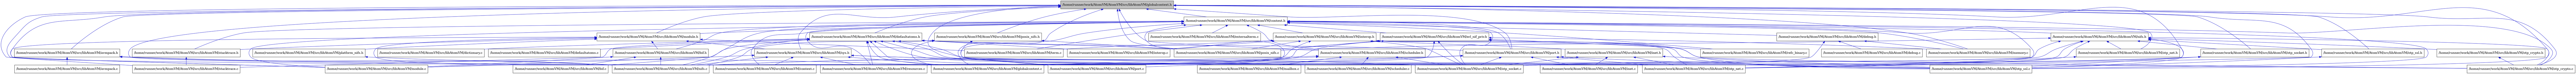 digraph {
    graph [bgcolor="#00000000"]
    node [shape=rectangle style=filled fillcolor="#FFFFFF" font=Helvetica padding=2]
    edge [color="#1414CE"]
    "9" [label="/home/runner/work/AtomVM/AtomVM/src/libAtomVM/bif.c" tooltip="/home/runner/work/AtomVM/AtomVM/src/libAtomVM/bif.c"]
    "45" [label="/home/runner/work/AtomVM/AtomVM/src/libAtomVM/dictionary.c" tooltip="/home/runner/work/AtomVM/AtomVM/src/libAtomVM/dictionary.c"]
    "8" [label="/home/runner/work/AtomVM/AtomVM/src/libAtomVM/bif.h" tooltip="/home/runner/work/AtomVM/AtomVM/src/libAtomVM/bif.h"]
    "30" [label="/home/runner/work/AtomVM/AtomVM/src/libAtomVM/platform_nifs.h" tooltip="/home/runner/work/AtomVM/AtomVM/src/libAtomVM/platform_nifs.h"]
    "18" [label="/home/runner/work/AtomVM/AtomVM/src/libAtomVM/posix_nifs.c" tooltip="/home/runner/work/AtomVM/AtomVM/src/libAtomVM/posix_nifs.c"]
    "46" [label="/home/runner/work/AtomVM/AtomVM/src/libAtomVM/posix_nifs.h" tooltip="/home/runner/work/AtomVM/AtomVM/src/libAtomVM/posix_nifs.h"]
    "44" [label="/home/runner/work/AtomVM/AtomVM/src/libAtomVM/defaultatoms.c" tooltip="/home/runner/work/AtomVM/AtomVM/src/libAtomVM/defaultatoms.c"]
    "43" [label="/home/runner/work/AtomVM/AtomVM/src/libAtomVM/defaultatoms.h" tooltip="/home/runner/work/AtomVM/AtomVM/src/libAtomVM/defaultatoms.h"]
    "24" [label="/home/runner/work/AtomVM/AtomVM/src/libAtomVM/inet.c" tooltip="/home/runner/work/AtomVM/AtomVM/src/libAtomVM/inet.c"]
    "23" [label="/home/runner/work/AtomVM/AtomVM/src/libAtomVM/inet.h" tooltip="/home/runner/work/AtomVM/AtomVM/src/libAtomVM/inet.h"]
    "14" [label="/home/runner/work/AtomVM/AtomVM/src/libAtomVM/scheduler.c" tooltip="/home/runner/work/AtomVM/AtomVM/src/libAtomVM/scheduler.c"]
    "41" [label="/home/runner/work/AtomVM/AtomVM/src/libAtomVM/scheduler.h" tooltip="/home/runner/work/AtomVM/AtomVM/src/libAtomVM/scheduler.h"]
    "6" [label="/home/runner/work/AtomVM/AtomVM/src/libAtomVM/context.c" tooltip="/home/runner/work/AtomVM/AtomVM/src/libAtomVM/context.c"]
    "7" [label="/home/runner/work/AtomVM/AtomVM/src/libAtomVM/context.h" tooltip="/home/runner/work/AtomVM/AtomVM/src/libAtomVM/context.h"]
    "39" [label="/home/runner/work/AtomVM/AtomVM/src/libAtomVM/port.c" tooltip="/home/runner/work/AtomVM/AtomVM/src/libAtomVM/port.c"]
    "40" [label="/home/runner/work/AtomVM/AtomVM/src/libAtomVM/port.h" tooltip="/home/runner/work/AtomVM/AtomVM/src/libAtomVM/port.h"]
    "32" [label="/home/runner/work/AtomVM/AtomVM/src/libAtomVM/stacktrace.c" tooltip="/home/runner/work/AtomVM/AtomVM/src/libAtomVM/stacktrace.c"]
    "31" [label="/home/runner/work/AtomVM/AtomVM/src/libAtomVM/stacktrace.h" tooltip="/home/runner/work/AtomVM/AtomVM/src/libAtomVM/stacktrace.h"]
    "19" [label="/home/runner/work/AtomVM/AtomVM/src/libAtomVM/refc_binary.c" tooltip="/home/runner/work/AtomVM/AtomVM/src/libAtomVM/refc_binary.c"]
    "42" [label="/home/runner/work/AtomVM/AtomVM/src/libAtomVM/mailbox.c" tooltip="/home/runner/work/AtomVM/AtomVM/src/libAtomVM/mailbox.c"]
    "10" [label="/home/runner/work/AtomVM/AtomVM/src/libAtomVM/module.c" tooltip="/home/runner/work/AtomVM/AtomVM/src/libAtomVM/module.c"]
    "29" [label="/home/runner/work/AtomVM/AtomVM/src/libAtomVM/module.h" tooltip="/home/runner/work/AtomVM/AtomVM/src/libAtomVM/module.h"]
    "3" [label="/home/runner/work/AtomVM/AtomVM/src/libAtomVM/avmpack.c" tooltip="/home/runner/work/AtomVM/AtomVM/src/libAtomVM/avmpack.c"]
    "2" [label="/home/runner/work/AtomVM/AtomVM/src/libAtomVM/avmpack.h" tooltip="/home/runner/work/AtomVM/AtomVM/src/libAtomVM/avmpack.h"]
    "28" [label="/home/runner/work/AtomVM/AtomVM/src/libAtomVM/term.c" tooltip="/home/runner/work/AtomVM/AtomVM/src/libAtomVM/term.c"]
    "26" [label="/home/runner/work/AtomVM/AtomVM/src/libAtomVM/interop.c" tooltip="/home/runner/work/AtomVM/AtomVM/src/libAtomVM/interop.c"]
    "17" [label="/home/runner/work/AtomVM/AtomVM/src/libAtomVM/otp_ssl.c" tooltip="/home/runner/work/AtomVM/AtomVM/src/libAtomVM/otp_ssl.c"]
    "22" [label="/home/runner/work/AtomVM/AtomVM/src/libAtomVM/interop.h" tooltip="/home/runner/work/AtomVM/AtomVM/src/libAtomVM/interop.h"]
    "38" [label="/home/runner/work/AtomVM/AtomVM/src/libAtomVM/otp_ssl.h" tooltip="/home/runner/work/AtomVM/AtomVM/src/libAtomVM/otp_ssl.h"]
    "20" [label="/home/runner/work/AtomVM/AtomVM/src/libAtomVM/resources.c" tooltip="/home/runner/work/AtomVM/AtomVM/src/libAtomVM/resources.c"]
    "27" [label="/home/runner/work/AtomVM/AtomVM/src/libAtomVM/otp_crypto.c" tooltip="/home/runner/work/AtomVM/AtomVM/src/libAtomVM/otp_crypto.c"]
    "35" [label="/home/runner/work/AtomVM/AtomVM/src/libAtomVM/otp_crypto.h" tooltip="/home/runner/work/AtomVM/AtomVM/src/libAtomVM/otp_crypto.h"]
    "25" [label="/home/runner/work/AtomVM/AtomVM/src/libAtomVM/otp_net.c" tooltip="/home/runner/work/AtomVM/AtomVM/src/libAtomVM/otp_net.c"]
    "36" [label="/home/runner/work/AtomVM/AtomVM/src/libAtomVM/otp_net.h" tooltip="/home/runner/work/AtomVM/AtomVM/src/libAtomVM/otp_net.h"]
    "15" [label="/home/runner/work/AtomVM/AtomVM/src/libAtomVM/erl_nif_priv.h" tooltip="/home/runner/work/AtomVM/AtomVM/src/libAtomVM/erl_nif_priv.h"]
    "33" [label="/home/runner/work/AtomVM/AtomVM/src/libAtomVM/sys.h" tooltip="/home/runner/work/AtomVM/AtomVM/src/libAtomVM/sys.h"]
    "5" [label="/home/runner/work/AtomVM/AtomVM/src/libAtomVM/nifs.c" tooltip="/home/runner/work/AtomVM/AtomVM/src/libAtomVM/nifs.c"]
    "34" [label="/home/runner/work/AtomVM/AtomVM/src/libAtomVM/nifs.h" tooltip="/home/runner/work/AtomVM/AtomVM/src/libAtomVM/nifs.h"]
    "12" [label="/home/runner/work/AtomVM/AtomVM/src/libAtomVM/debug.c" tooltip="/home/runner/work/AtomVM/AtomVM/src/libAtomVM/debug.c"]
    "11" [label="/home/runner/work/AtomVM/AtomVM/src/libAtomVM/debug.h" tooltip="/home/runner/work/AtomVM/AtomVM/src/libAtomVM/debug.h"]
    "4" [label="/home/runner/work/AtomVM/AtomVM/src/libAtomVM/globalcontext.c" tooltip="/home/runner/work/AtomVM/AtomVM/src/libAtomVM/globalcontext.c"]
    "1" [label="/home/runner/work/AtomVM/AtomVM/src/libAtomVM/globalcontext.h" tooltip="/home/runner/work/AtomVM/AtomVM/src/libAtomVM/globalcontext.h" fillcolor="#BFBFBF"]
    "13" [label="/home/runner/work/AtomVM/AtomVM/src/libAtomVM/memory.c" tooltip="/home/runner/work/AtomVM/AtomVM/src/libAtomVM/memory.c"]
    "16" [label="/home/runner/work/AtomVM/AtomVM/src/libAtomVM/otp_socket.c" tooltip="/home/runner/work/AtomVM/AtomVM/src/libAtomVM/otp_socket.c"]
    "37" [label="/home/runner/work/AtomVM/AtomVM/src/libAtomVM/otp_socket.h" tooltip="/home/runner/work/AtomVM/AtomVM/src/libAtomVM/otp_socket.h"]
    "21" [label="/home/runner/work/AtomVM/AtomVM/src/libAtomVM/externalterm.c" tooltip="/home/runner/work/AtomVM/AtomVM/src/libAtomVM/externalterm.c"]
    "8" -> "9" [dir=back tooltip="include"]
    "8" -> "10" [dir=back tooltip="include"]
    "8" -> "5" [dir=back tooltip="include"]
    "30" -> "5" [dir=back tooltip="include"]
    "46" -> "4" [dir=back tooltip="include"]
    "46" -> "5" [dir=back tooltip="include"]
    "46" -> "16" [dir=back tooltip="include"]
    "46" -> "18" [dir=back tooltip="include"]
    "43" -> "9" [dir=back tooltip="include"]
    "43" -> "44" [dir=back tooltip="include"]
    "43" -> "45" [dir=back tooltip="include"]
    "43" -> "4" [dir=back tooltip="include"]
    "43" -> "26" [dir=back tooltip="include"]
    "43" -> "5" [dir=back tooltip="include"]
    "43" -> "27" [dir=back tooltip="include"]
    "43" -> "25" [dir=back tooltip="include"]
    "43" -> "16" [dir=back tooltip="include"]
    "43" -> "17" [dir=back tooltip="include"]
    "43" -> "39" [dir=back tooltip="include"]
    "43" -> "40" [dir=back tooltip="include"]
    "43" -> "18" [dir=back tooltip="include"]
    "43" -> "20" [dir=back tooltip="include"]
    "43" -> "32" [dir=back tooltip="include"]
    "23" -> "24" [dir=back tooltip="include"]
    "23" -> "25" [dir=back tooltip="include"]
    "23" -> "16" [dir=back tooltip="include"]
    "23" -> "17" [dir=back tooltip="include"]
    "41" -> "4" [dir=back tooltip="include"]
    "41" -> "42" [dir=back tooltip="include"]
    "41" -> "5" [dir=back tooltip="include"]
    "41" -> "16" [dir=back tooltip="include"]
    "41" -> "14" [dir=back tooltip="include"]
    "7" -> "8" [dir=back tooltip="include"]
    "7" -> "6" [dir=back tooltip="include"]
    "7" -> "11" [dir=back tooltip="include"]
    "7" -> "15" [dir=back tooltip="include"]
    "7" -> "21" [dir=back tooltip="include"]
    "7" -> "4" [dir=back tooltip="include"]
    "7" -> "22" [dir=back tooltip="include"]
    "7" -> "13" [dir=back tooltip="include"]
    "7" -> "10" [dir=back tooltip="include"]
    "7" -> "29" [dir=back tooltip="include"]
    "7" -> "5" [dir=back tooltip="include"]
    "7" -> "34" [dir=back tooltip="include"]
    "7" -> "27" [dir=back tooltip="include"]
    "7" -> "25" [dir=back tooltip="include"]
    "7" -> "16" [dir=back tooltip="include"]
    "7" -> "17" [dir=back tooltip="include"]
    "7" -> "39" [dir=back tooltip="include"]
    "7" -> "40" [dir=back tooltip="include"]
    "7" -> "19" [dir=back tooltip="include"]
    "7" -> "20" [dir=back tooltip="include"]
    "7" -> "41" [dir=back tooltip="include"]
    "7" -> "31" [dir=back tooltip="include"]
    "7" -> "28" [dir=back tooltip="include"]
    "40" -> "24" [dir=back tooltip="include"]
    "40" -> "5" [dir=back tooltip="include"]
    "40" -> "25" [dir=back tooltip="include"]
    "40" -> "16" [dir=back tooltip="include"]
    "40" -> "17" [dir=back tooltip="include"]
    "40" -> "39" [dir=back tooltip="include"]
    "31" -> "32" [dir=back tooltip="include"]
    "29" -> "8" [dir=back tooltip="include"]
    "29" -> "10" [dir=back tooltip="include"]
    "29" -> "5" [dir=back tooltip="include"]
    "29" -> "30" [dir=back tooltip="include"]
    "29" -> "31" [dir=back tooltip="include"]
    "29" -> "33" [dir=back tooltip="include"]
    "29" -> "28" [dir=back tooltip="include"]
    "2" -> "3" [dir=back tooltip="include"]
    "2" -> "4" [dir=back tooltip="include"]
    "2" -> "5" [dir=back tooltip="include"]
    "22" -> "23" [dir=back tooltip="include"]
    "22" -> "26" [dir=back tooltip="include"]
    "22" -> "5" [dir=back tooltip="include"]
    "22" -> "27" [dir=back tooltip="include"]
    "22" -> "25" [dir=back tooltip="include"]
    "22" -> "16" [dir=back tooltip="include"]
    "22" -> "17" [dir=back tooltip="include"]
    "22" -> "18" [dir=back tooltip="include"]
    "22" -> "28" [dir=back tooltip="include"]
    "38" -> "17" [dir=back tooltip="include"]
    "35" -> "27" [dir=back tooltip="include"]
    "36" -> "25" [dir=back tooltip="include"]
    "15" -> "6" [dir=back tooltip="include"]
    "15" -> "4" [dir=back tooltip="include"]
    "15" -> "13" [dir=back tooltip="include"]
    "15" -> "16" [dir=back tooltip="include"]
    "15" -> "17" [dir=back tooltip="include"]
    "15" -> "18" [dir=back tooltip="include"]
    "15" -> "19" [dir=back tooltip="include"]
    "15" -> "20" [dir=back tooltip="include"]
    "33" -> "6" [dir=back tooltip="include"]
    "33" -> "4" [dir=back tooltip="include"]
    "33" -> "10" [dir=back tooltip="include"]
    "33" -> "5" [dir=back tooltip="include"]
    "33" -> "16" [dir=back tooltip="include"]
    "33" -> "20" [dir=back tooltip="include"]
    "33" -> "14" [dir=back tooltip="include"]
    "34" -> "10" [dir=back tooltip="include"]
    "34" -> "5" [dir=back tooltip="include"]
    "34" -> "27" [dir=back tooltip="include"]
    "34" -> "35" [dir=back tooltip="include"]
    "34" -> "25" [dir=back tooltip="include"]
    "34" -> "36" [dir=back tooltip="include"]
    "34" -> "16" [dir=back tooltip="include"]
    "34" -> "37" [dir=back tooltip="include"]
    "34" -> "17" [dir=back tooltip="include"]
    "34" -> "38" [dir=back tooltip="include"]
    "34" -> "18" [dir=back tooltip="include"]
    "11" -> "12" [dir=back tooltip="include"]
    "11" -> "13" [dir=back tooltip="include"]
    "11" -> "14" [dir=back tooltip="include"]
    "1" -> "2" [dir=back tooltip="include"]
    "1" -> "6" [dir=back tooltip="include"]
    "1" -> "7" [dir=back tooltip="include"]
    "1" -> "43" [dir=back tooltip="include"]
    "1" -> "4" [dir=back tooltip="include"]
    "1" -> "13" [dir=back tooltip="include"]
    "1" -> "10" [dir=back tooltip="include"]
    "1" -> "29" [dir=back tooltip="include"]
    "1" -> "5" [dir=back tooltip="include"]
    "1" -> "27" [dir=back tooltip="include"]
    "1" -> "25" [dir=back tooltip="include"]
    "1" -> "36" [dir=back tooltip="include"]
    "1" -> "16" [dir=back tooltip="include"]
    "1" -> "37" [dir=back tooltip="include"]
    "1" -> "17" [dir=back tooltip="include"]
    "1" -> "38" [dir=back tooltip="include"]
    "1" -> "39" [dir=back tooltip="include"]
    "1" -> "40" [dir=back tooltip="include"]
    "1" -> "18" [dir=back tooltip="include"]
    "1" -> "46" [dir=back tooltip="include"]
    "1" -> "41" [dir=back tooltip="include"]
    "1" -> "32" [dir=back tooltip="include"]
    "1" -> "33" [dir=back tooltip="include"]
    "37" -> "16" [dir=back tooltip="include"]
    "37" -> "17" [dir=back tooltip="include"]
}